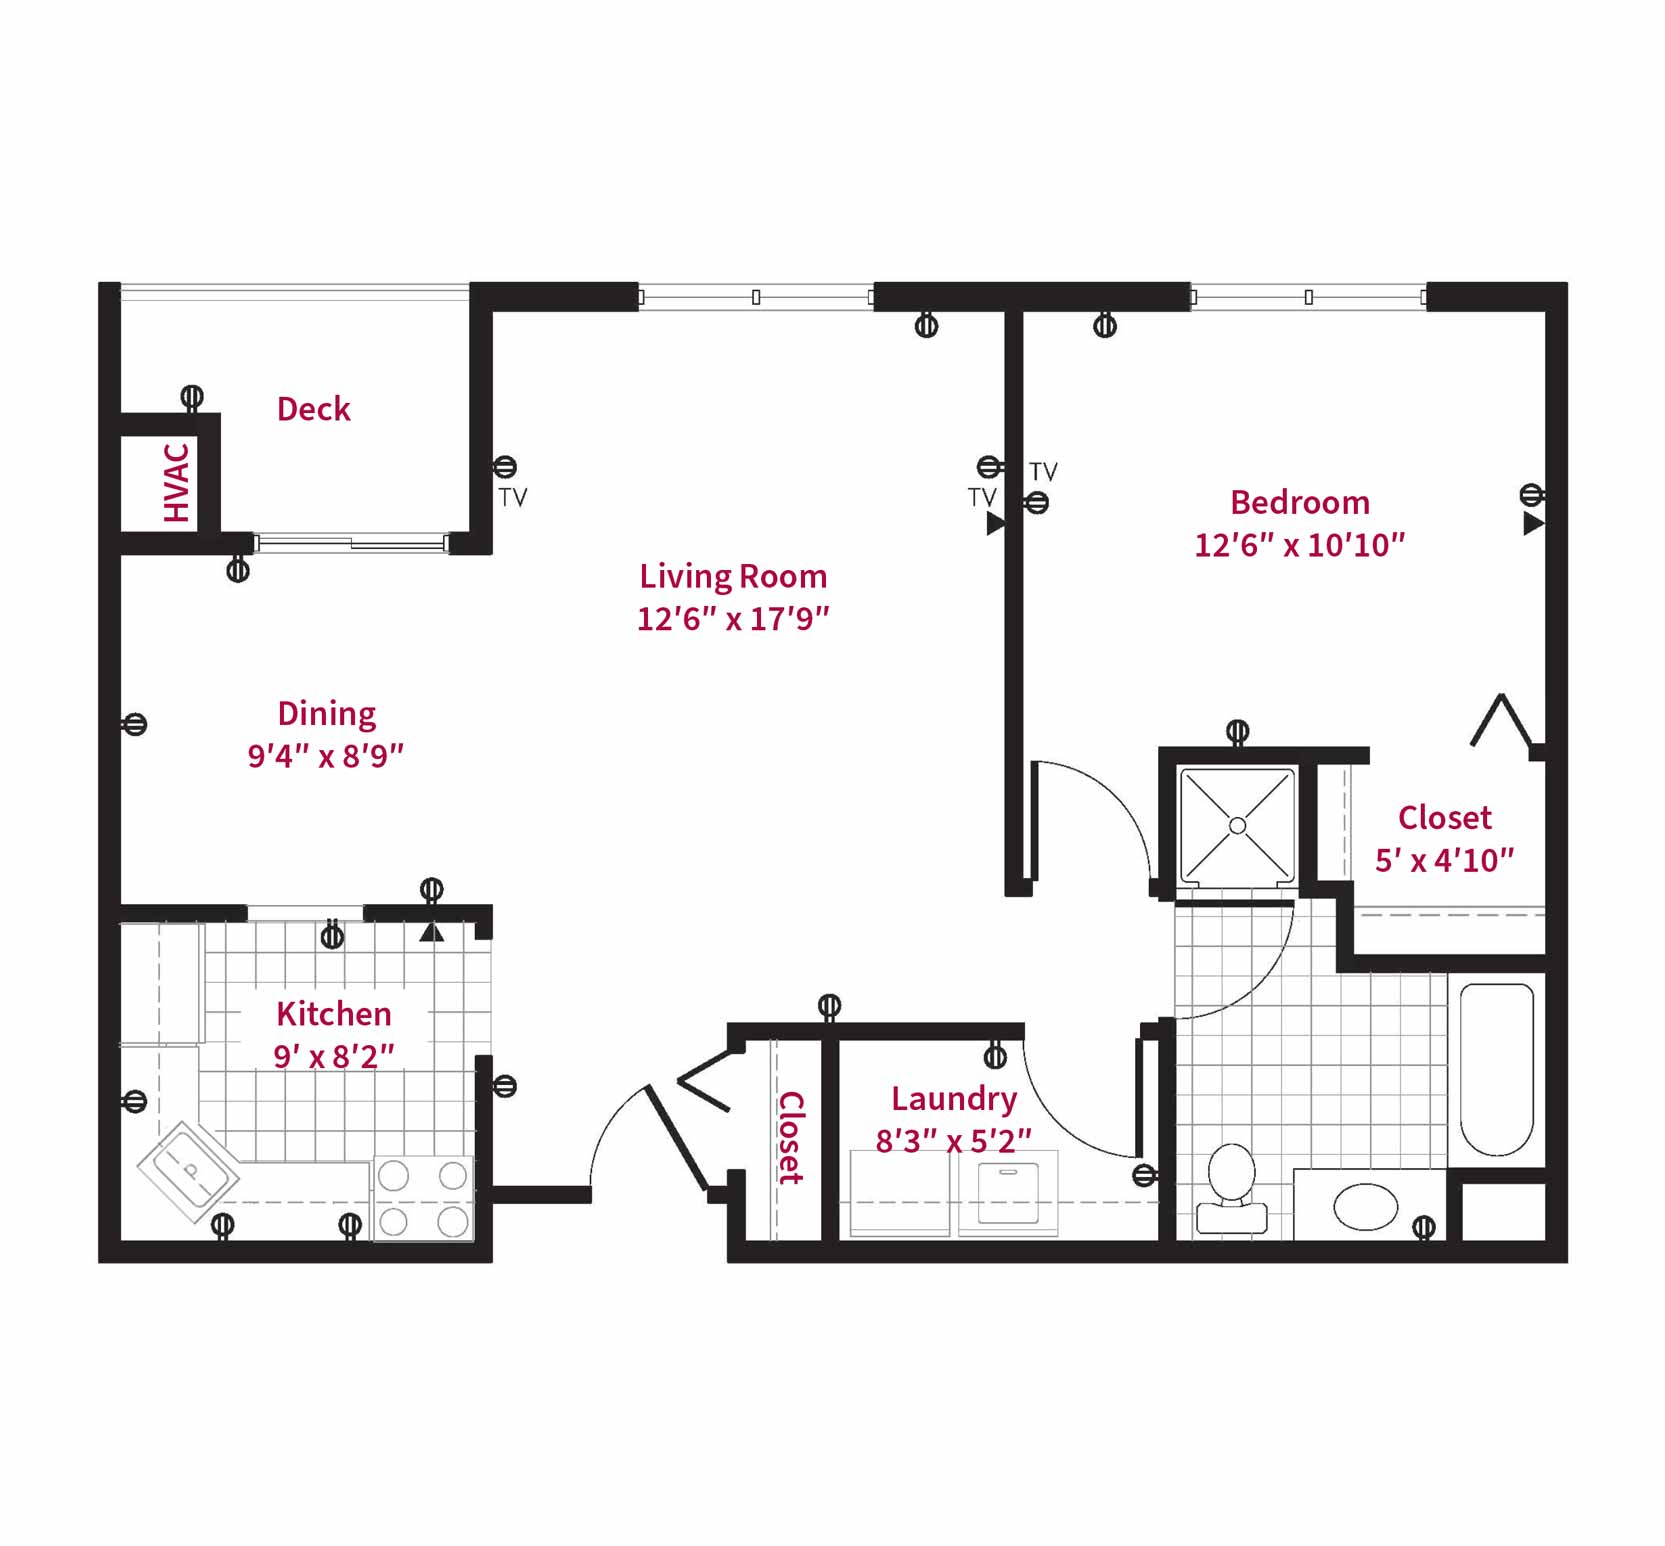 Senior Apartment Floor Plan in Downingtown PA - Aster floor plan